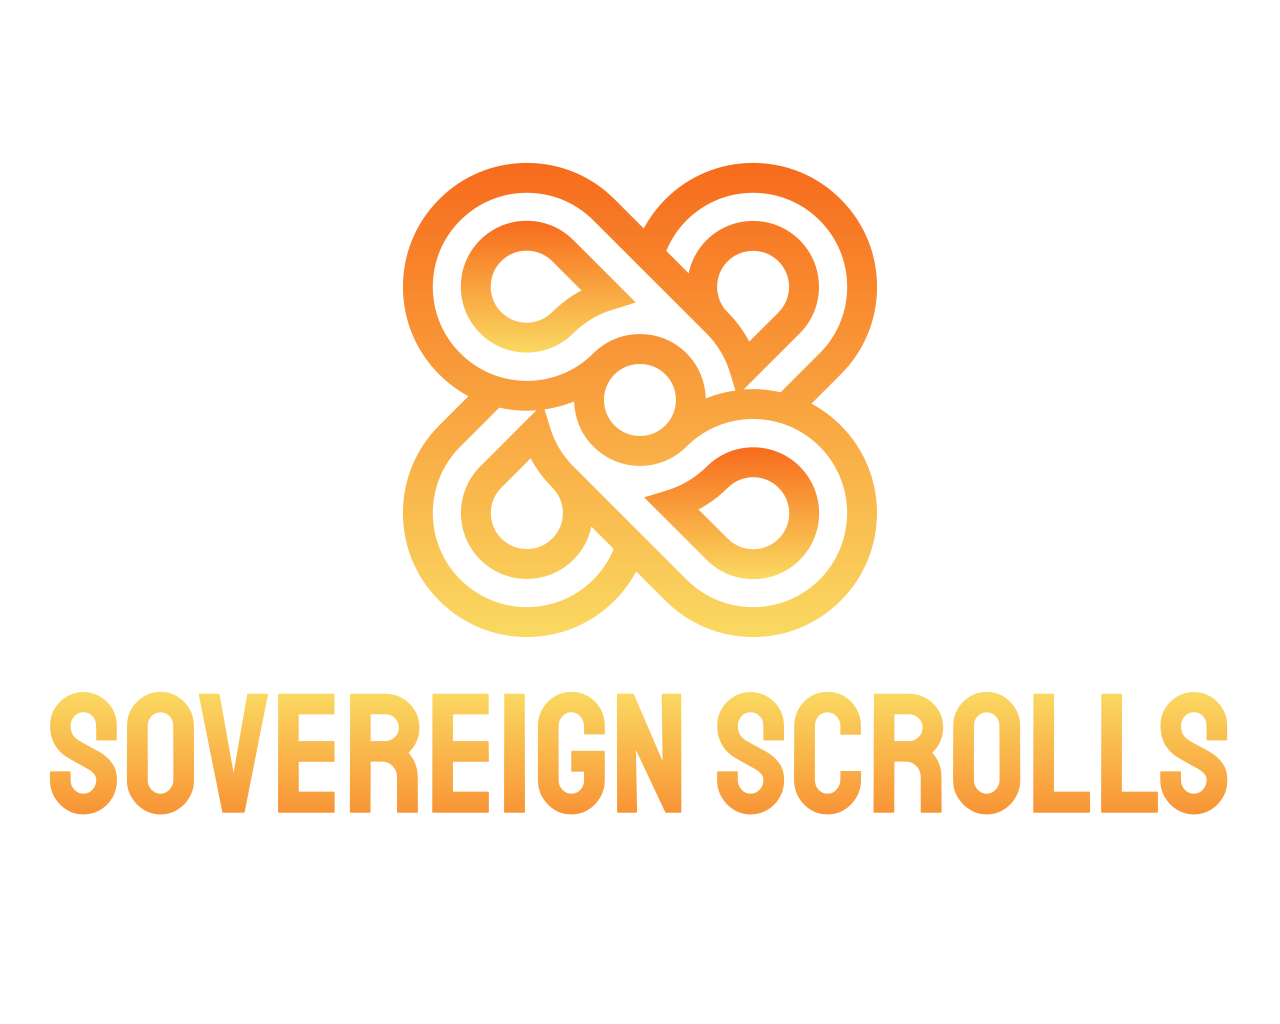 Sovereign Scrolls